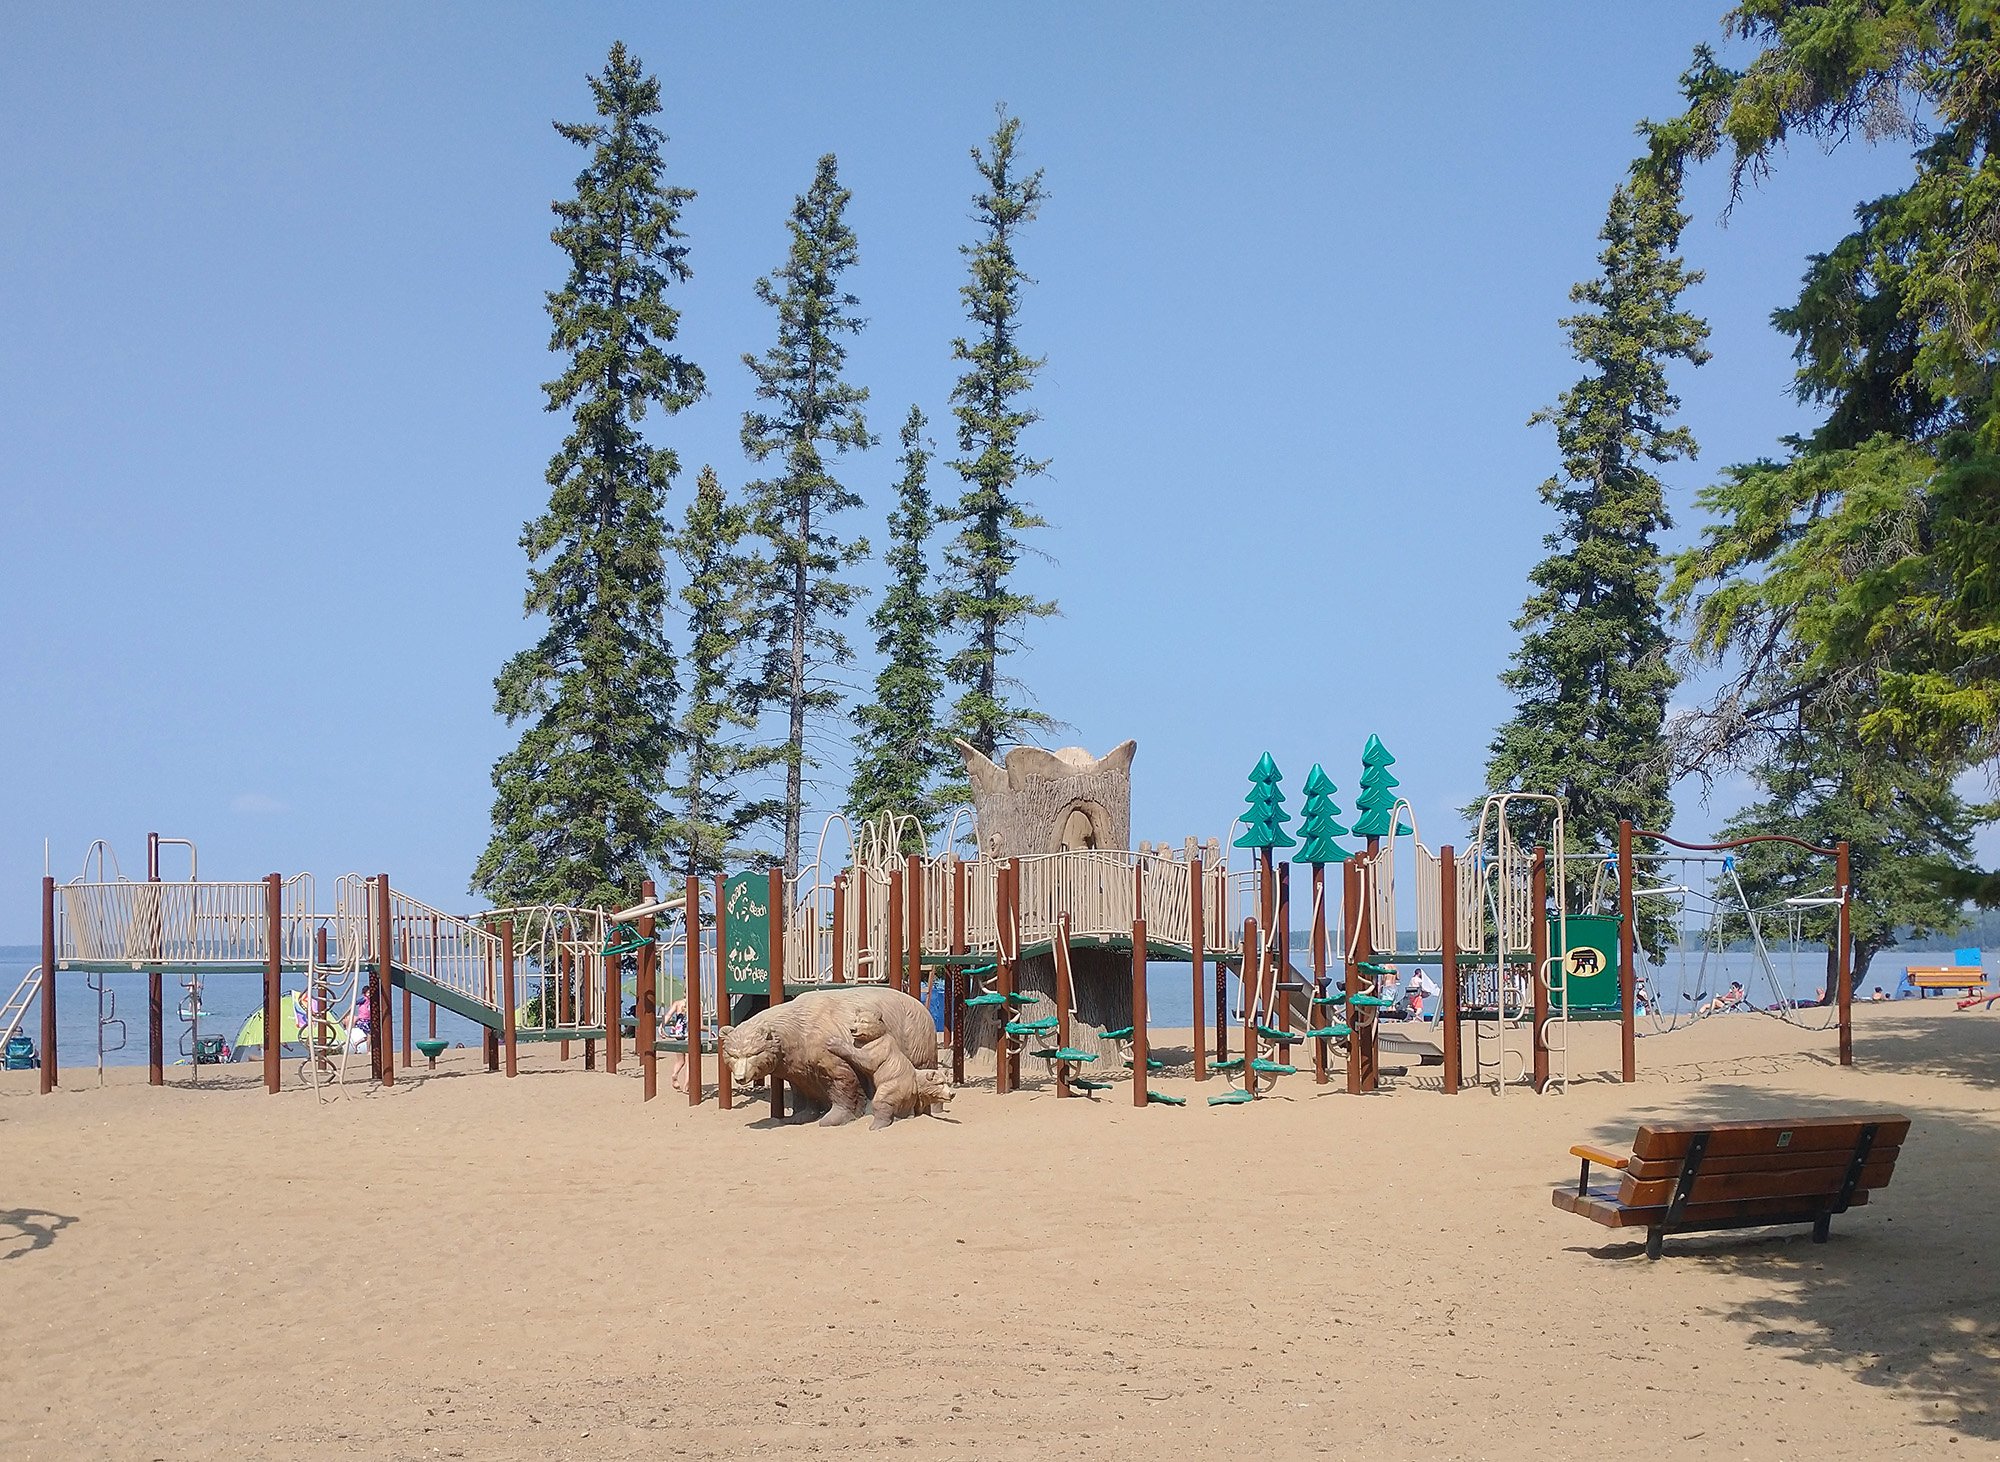 Bear-theme children's playground.